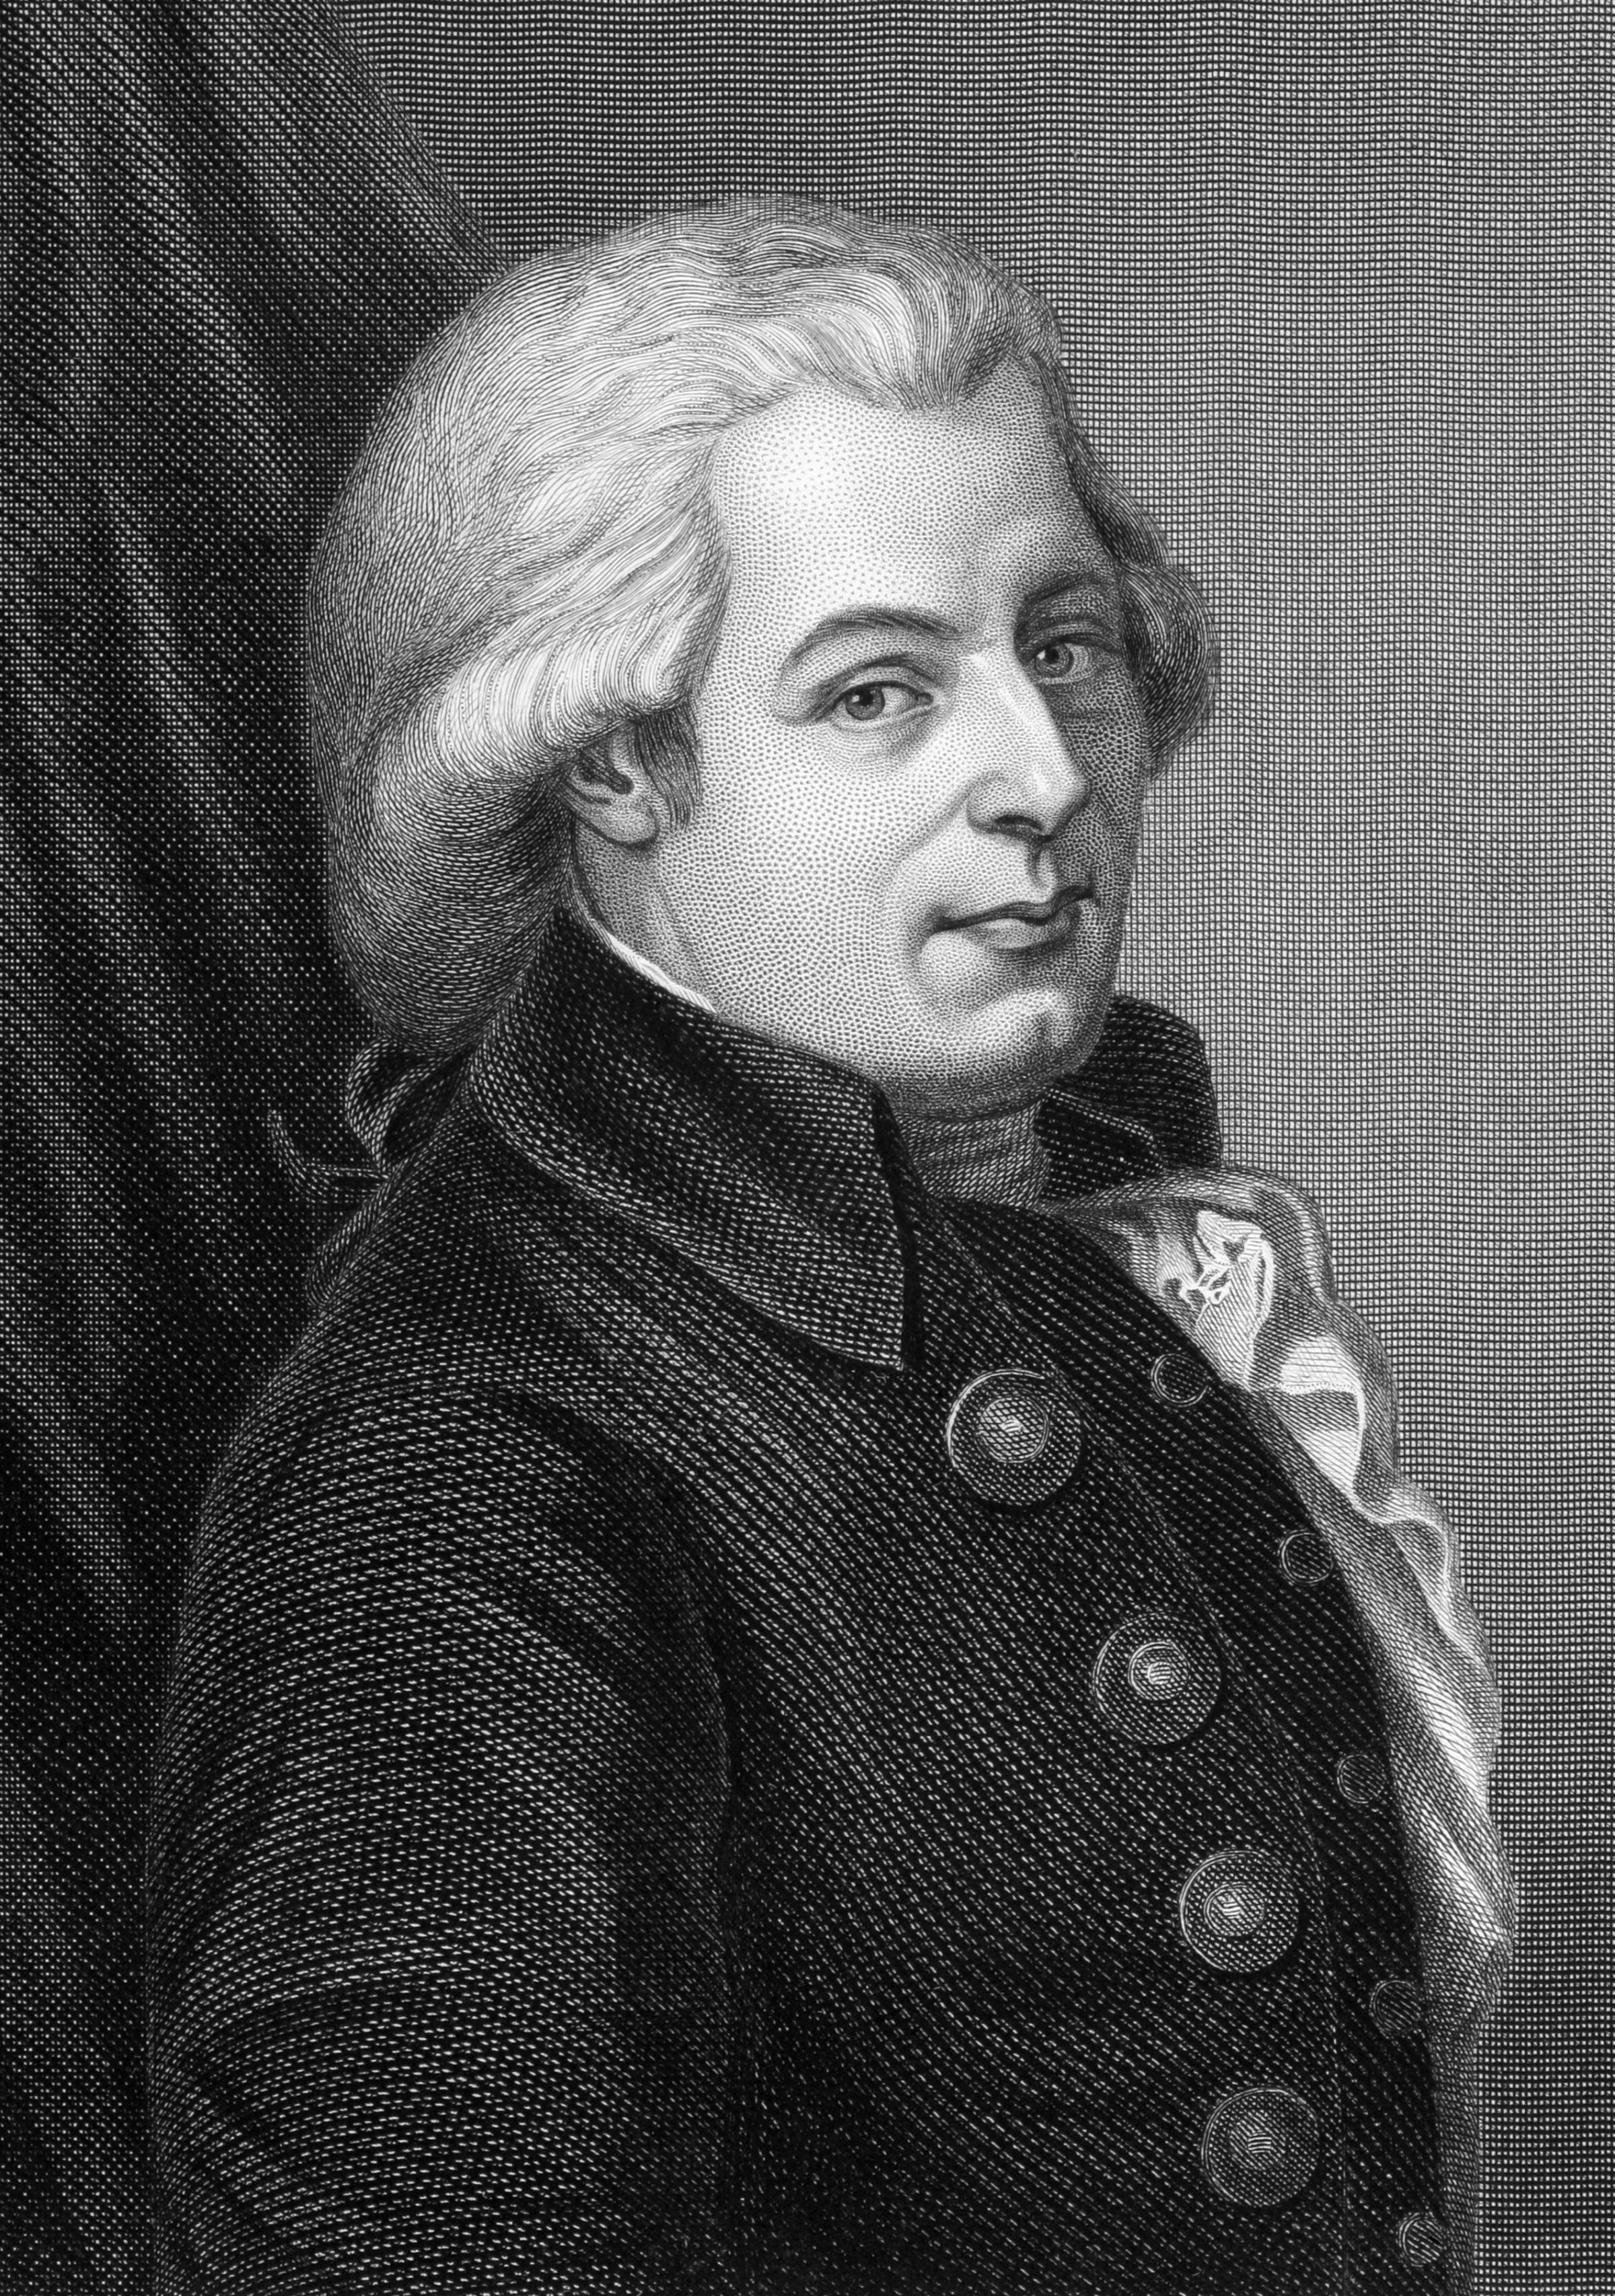 Famous Classical composer, Wolfgang Amadeus Mozart, battled Tourettes Syndrome